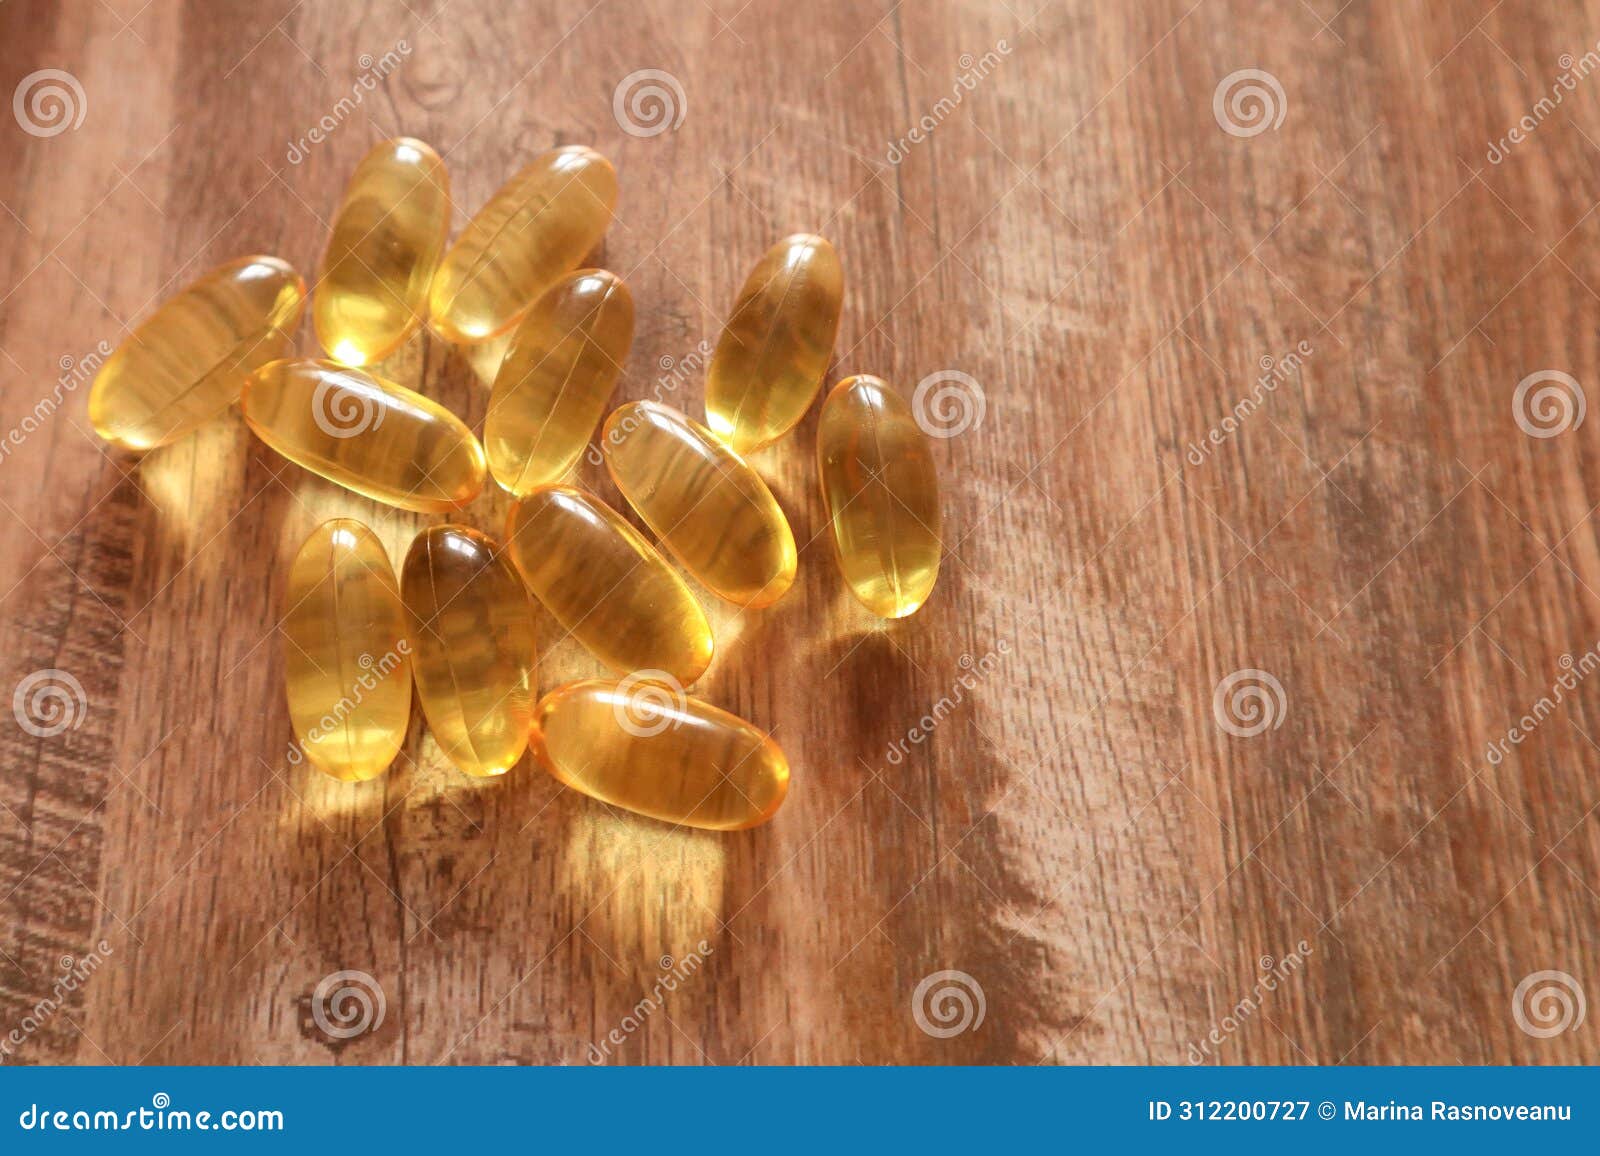 omega-3 pills supplements